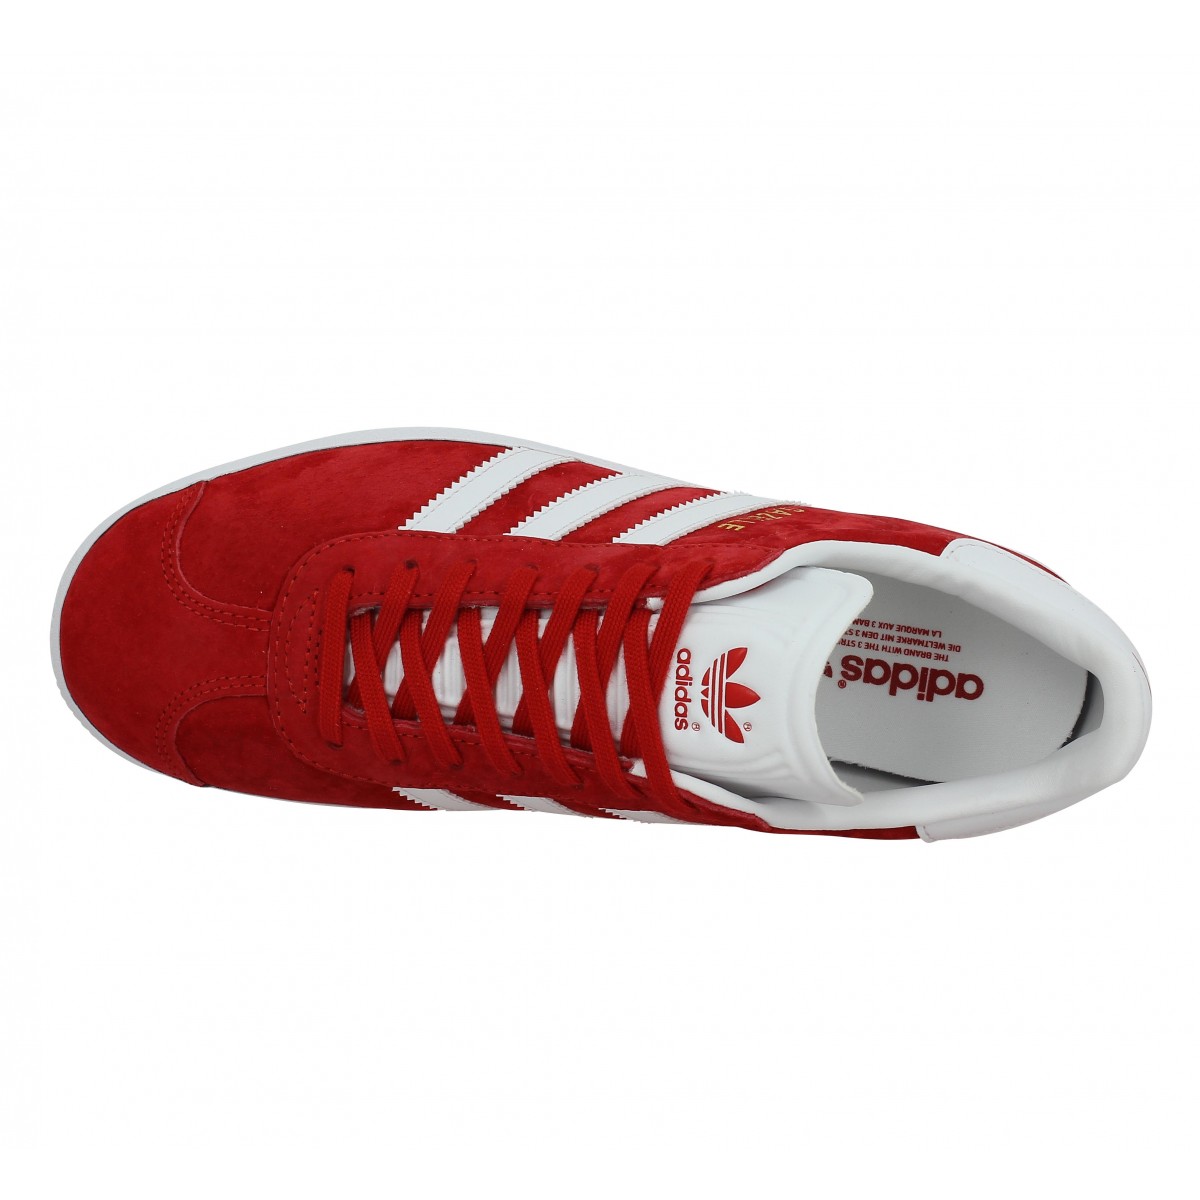 Adidas gazelle rouge femme | Fanny chaussures